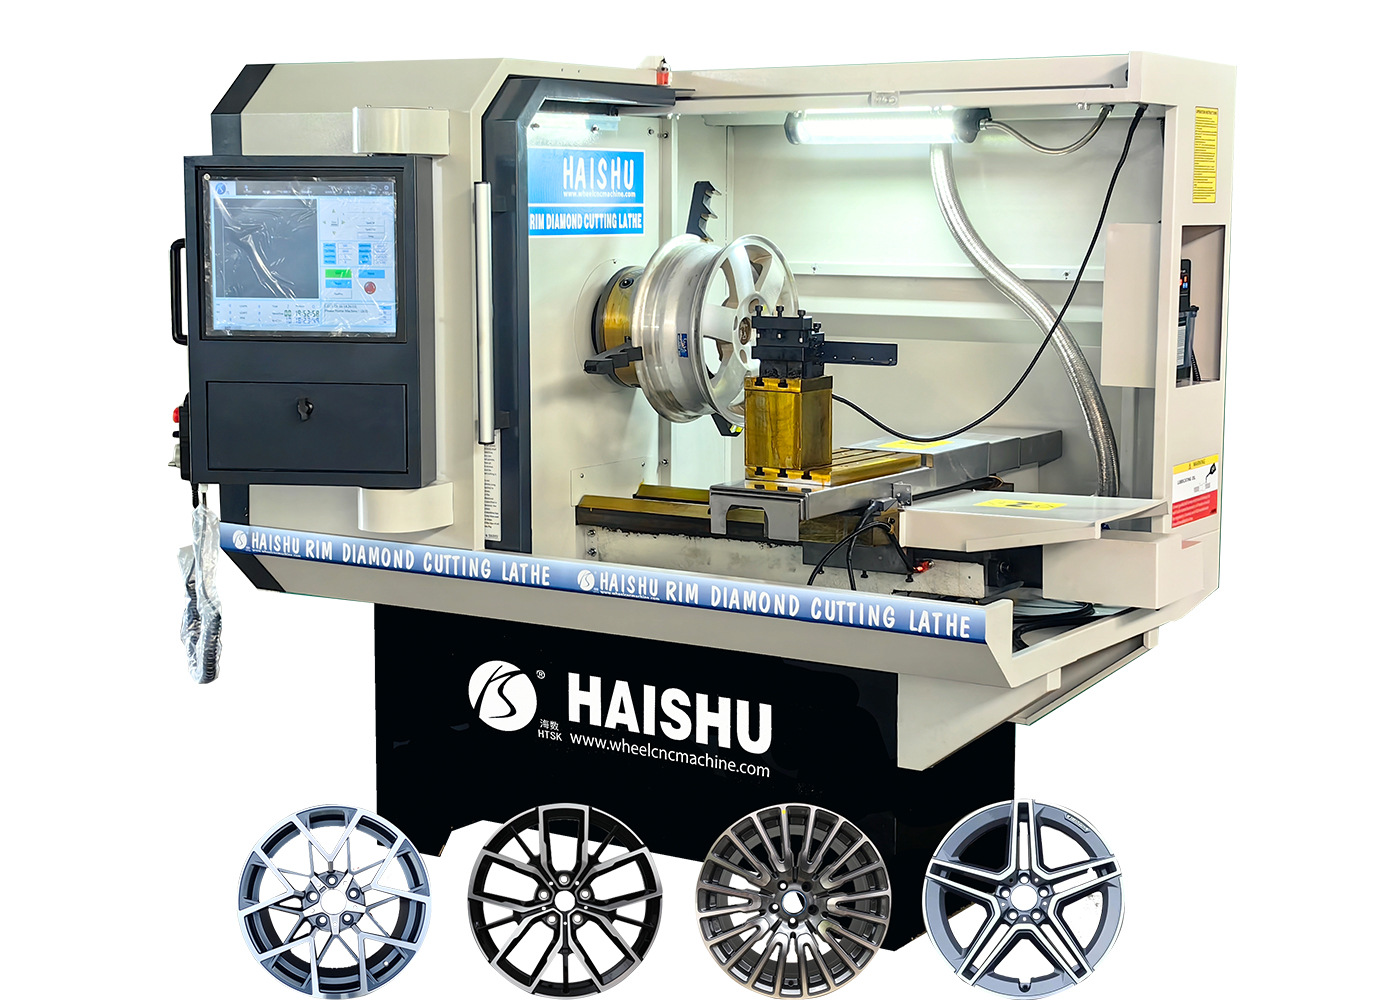 Introduction to Haishu's Custom Wheel Repair Lathe